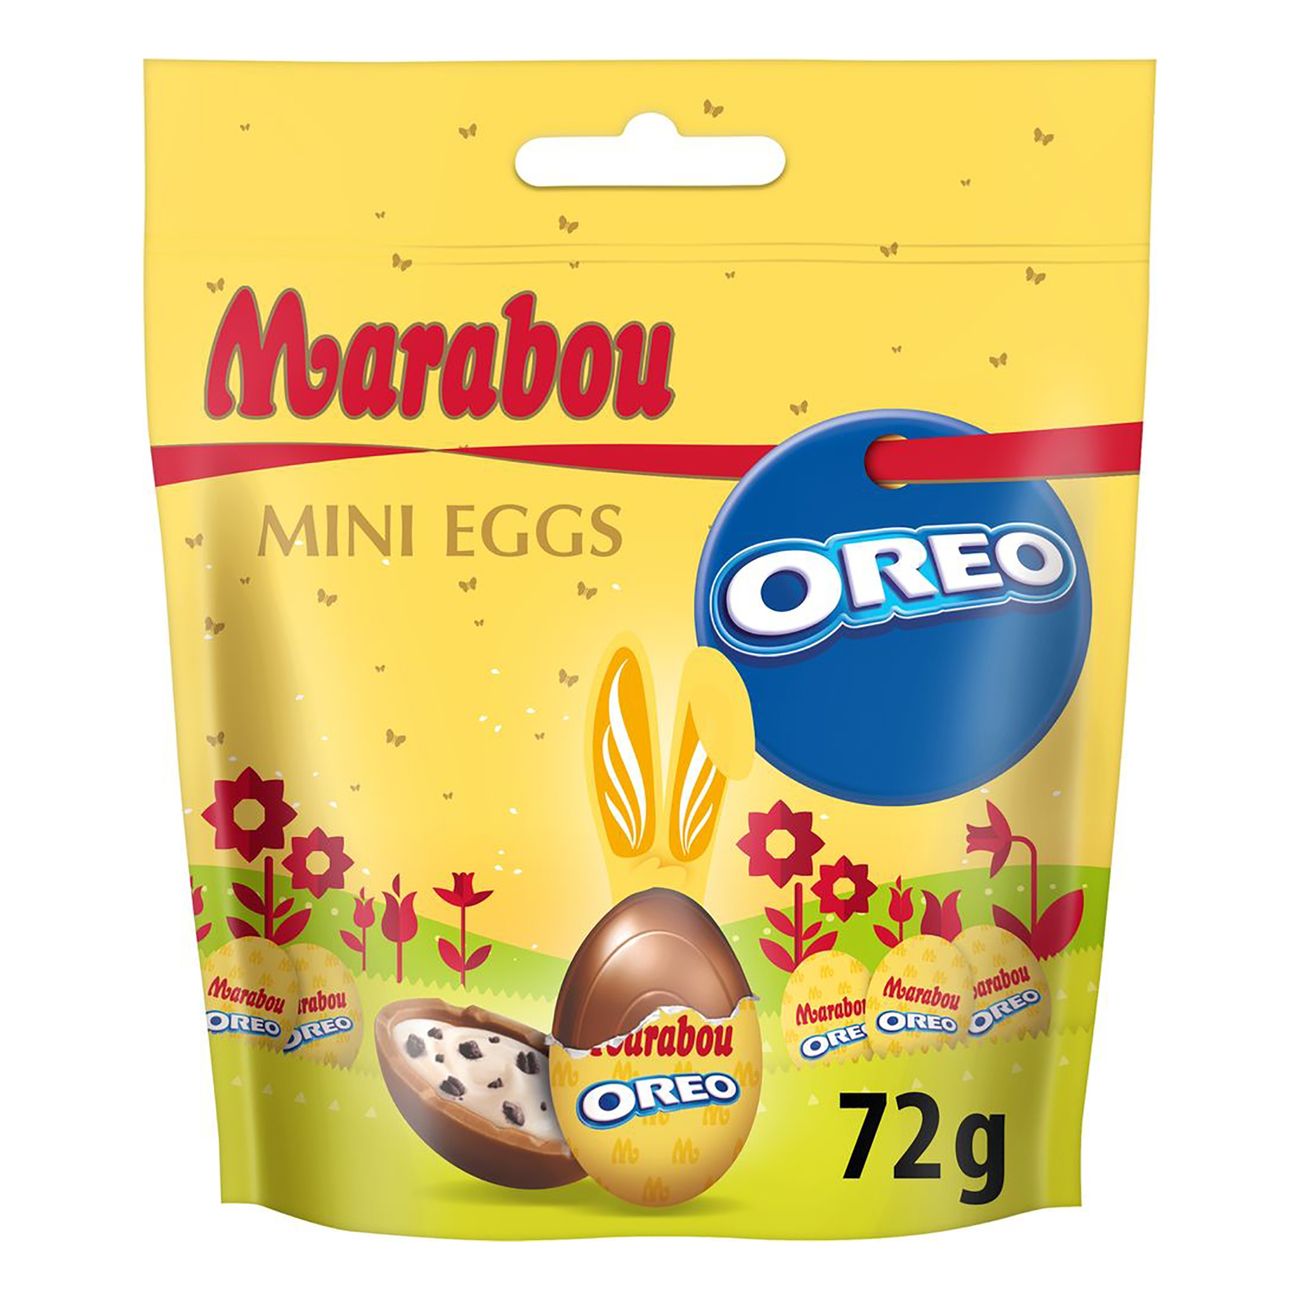 marabou-oreo-mini-eggs-92729-1